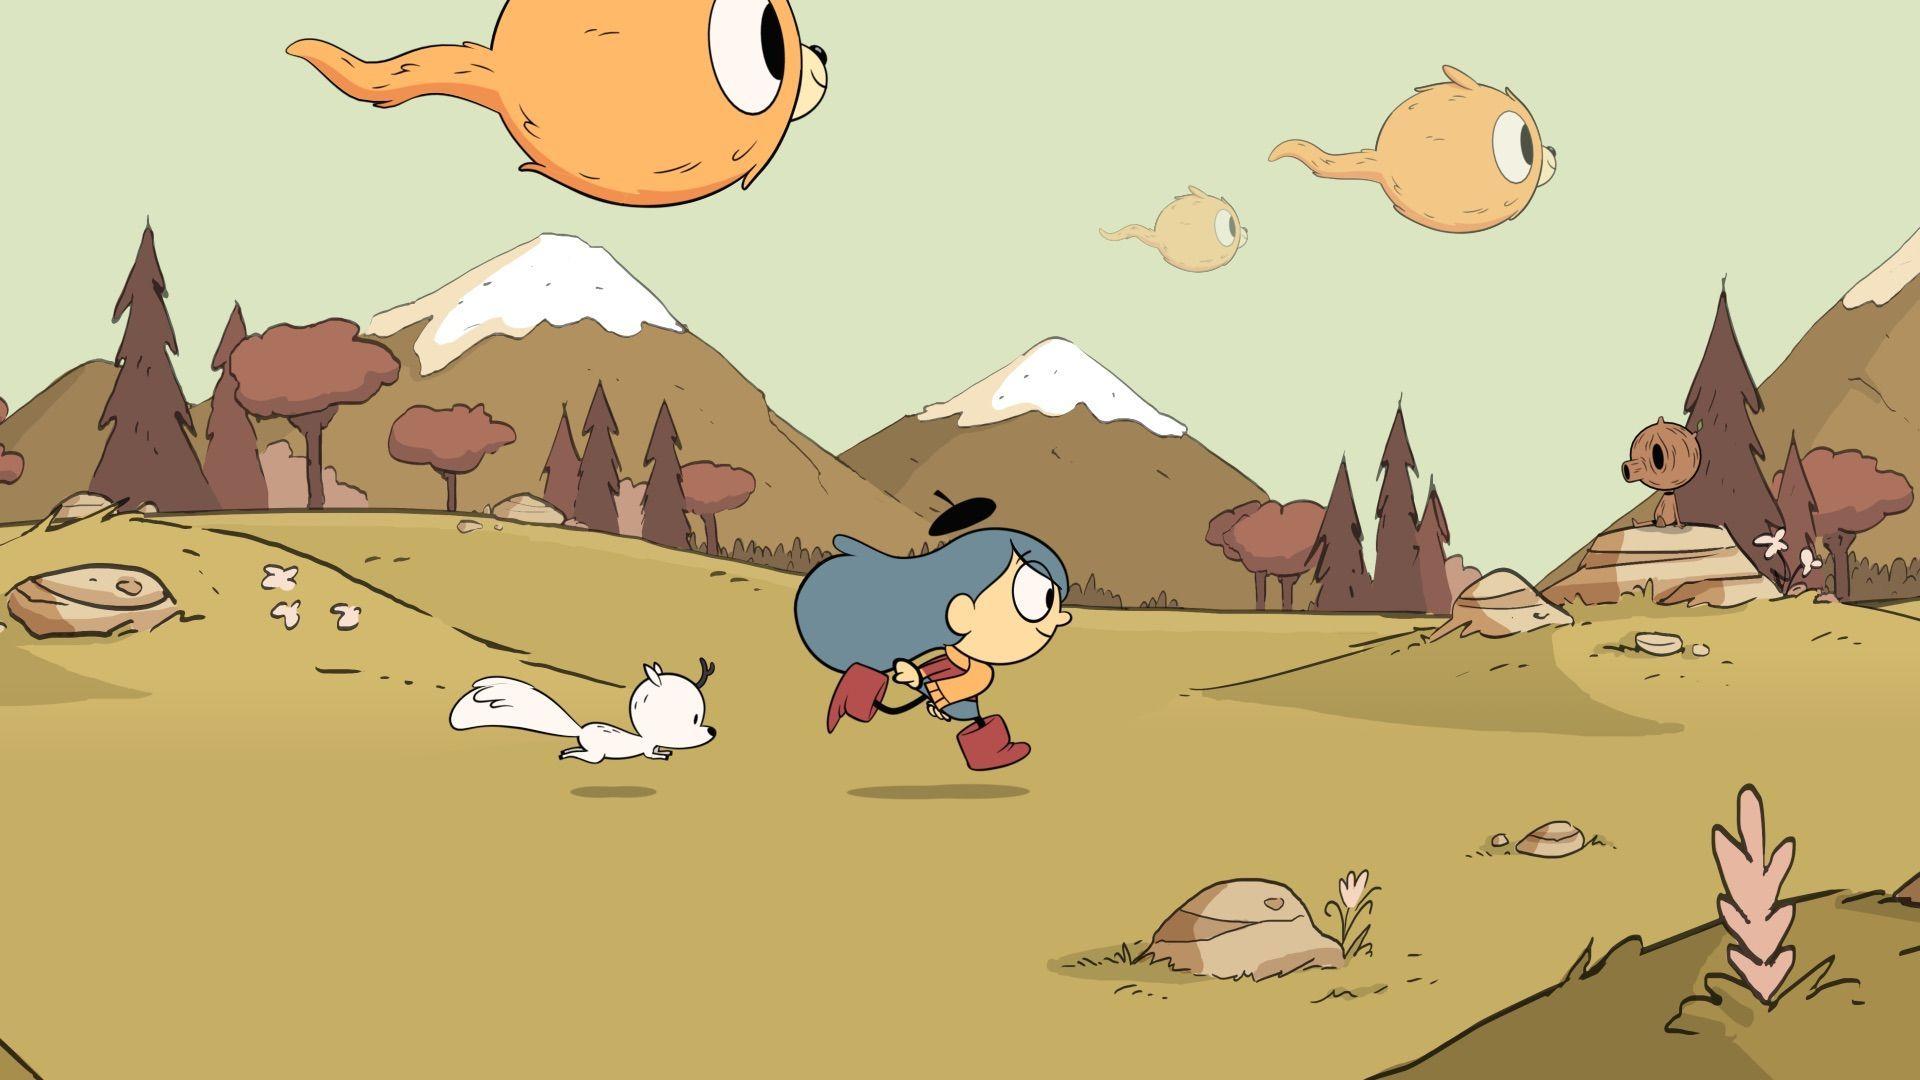 Netflix's Hilda looks like combination of Adventure Time, Gravity